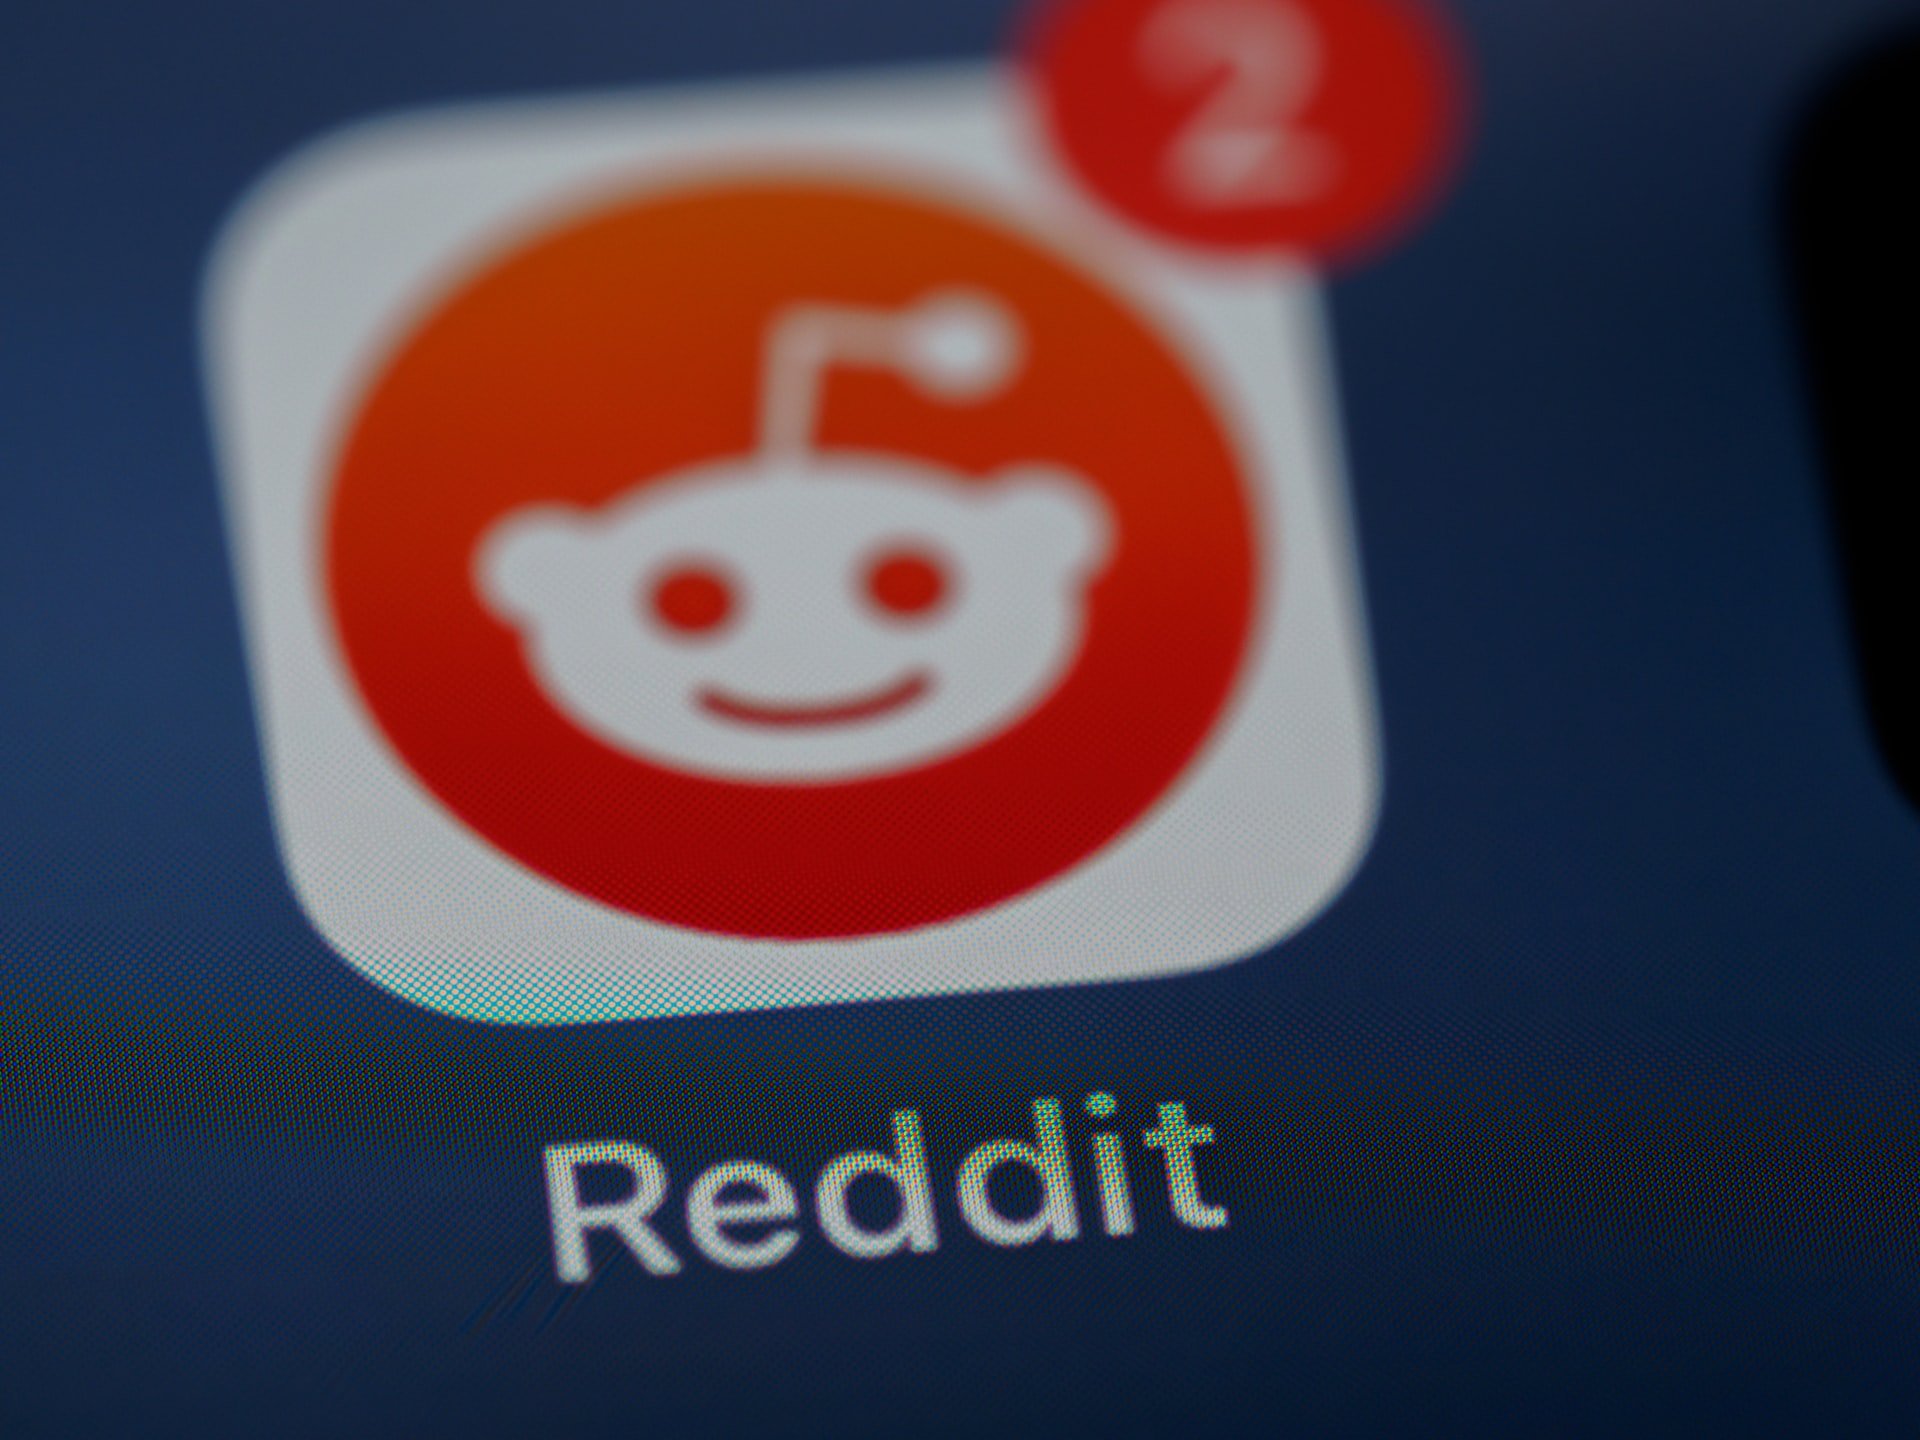 Reddit app icon on a mobile phone | Source: Unsplash